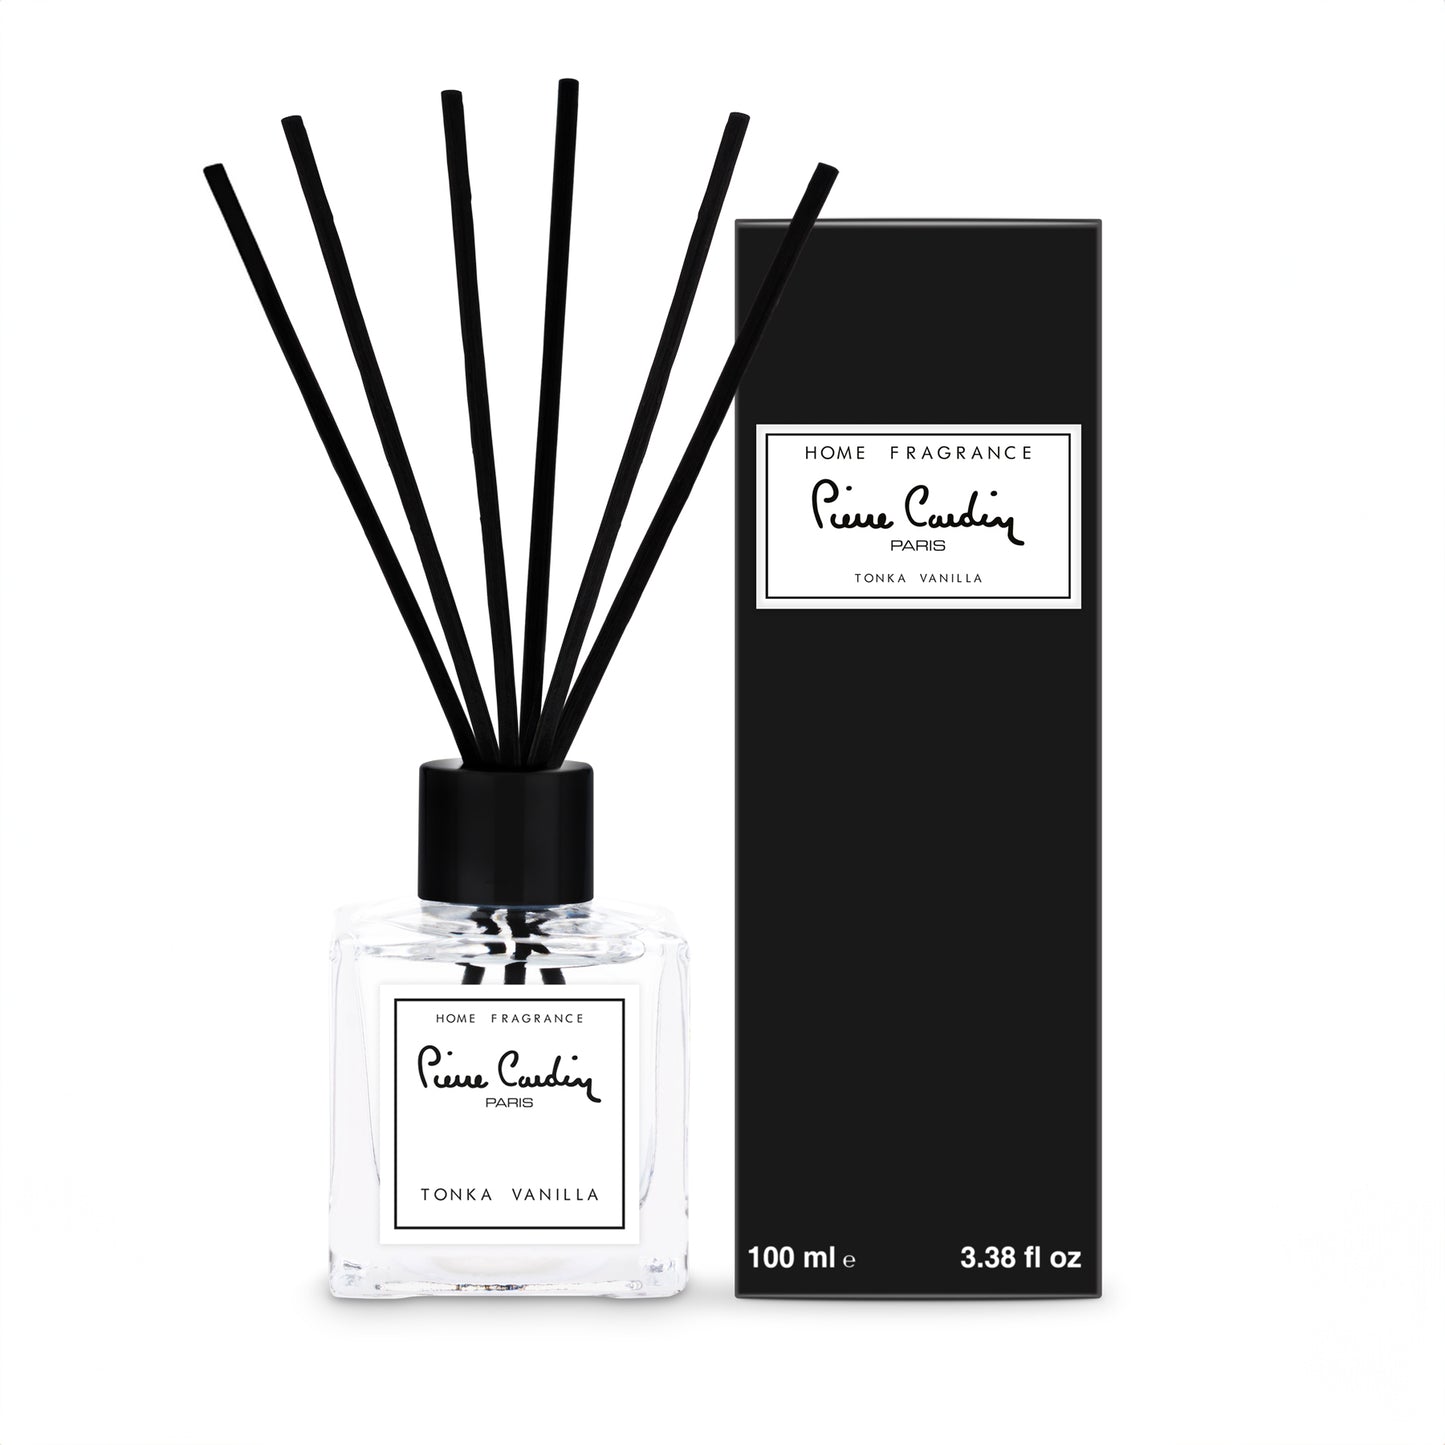 Parfum d'Intérieur Pierre Cardin - TONKA & VANILLE 100 ml